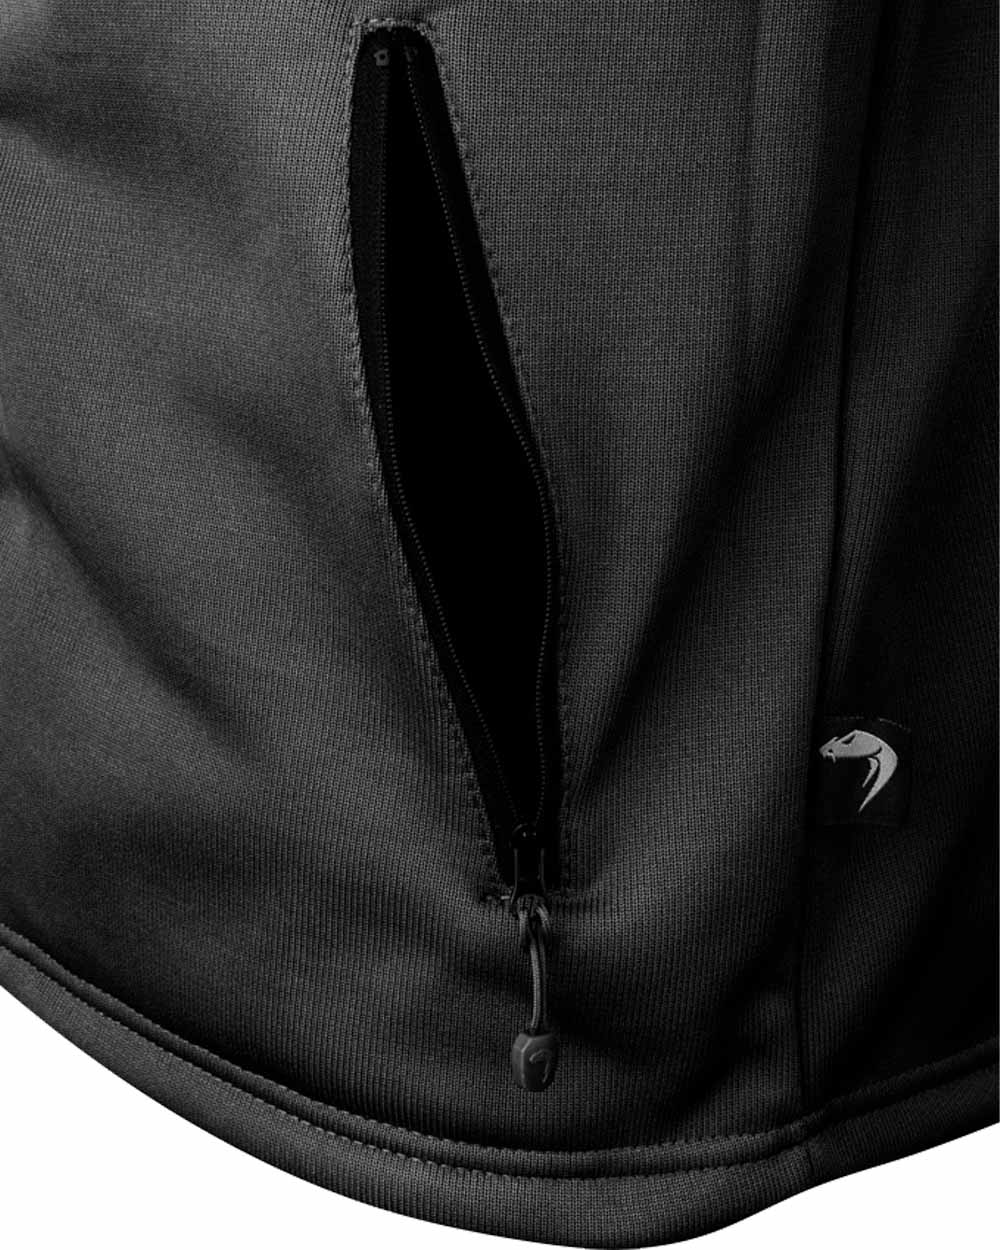 Black coloured Viper Gen 2 Spec Ops Fleece Jacket on White background 